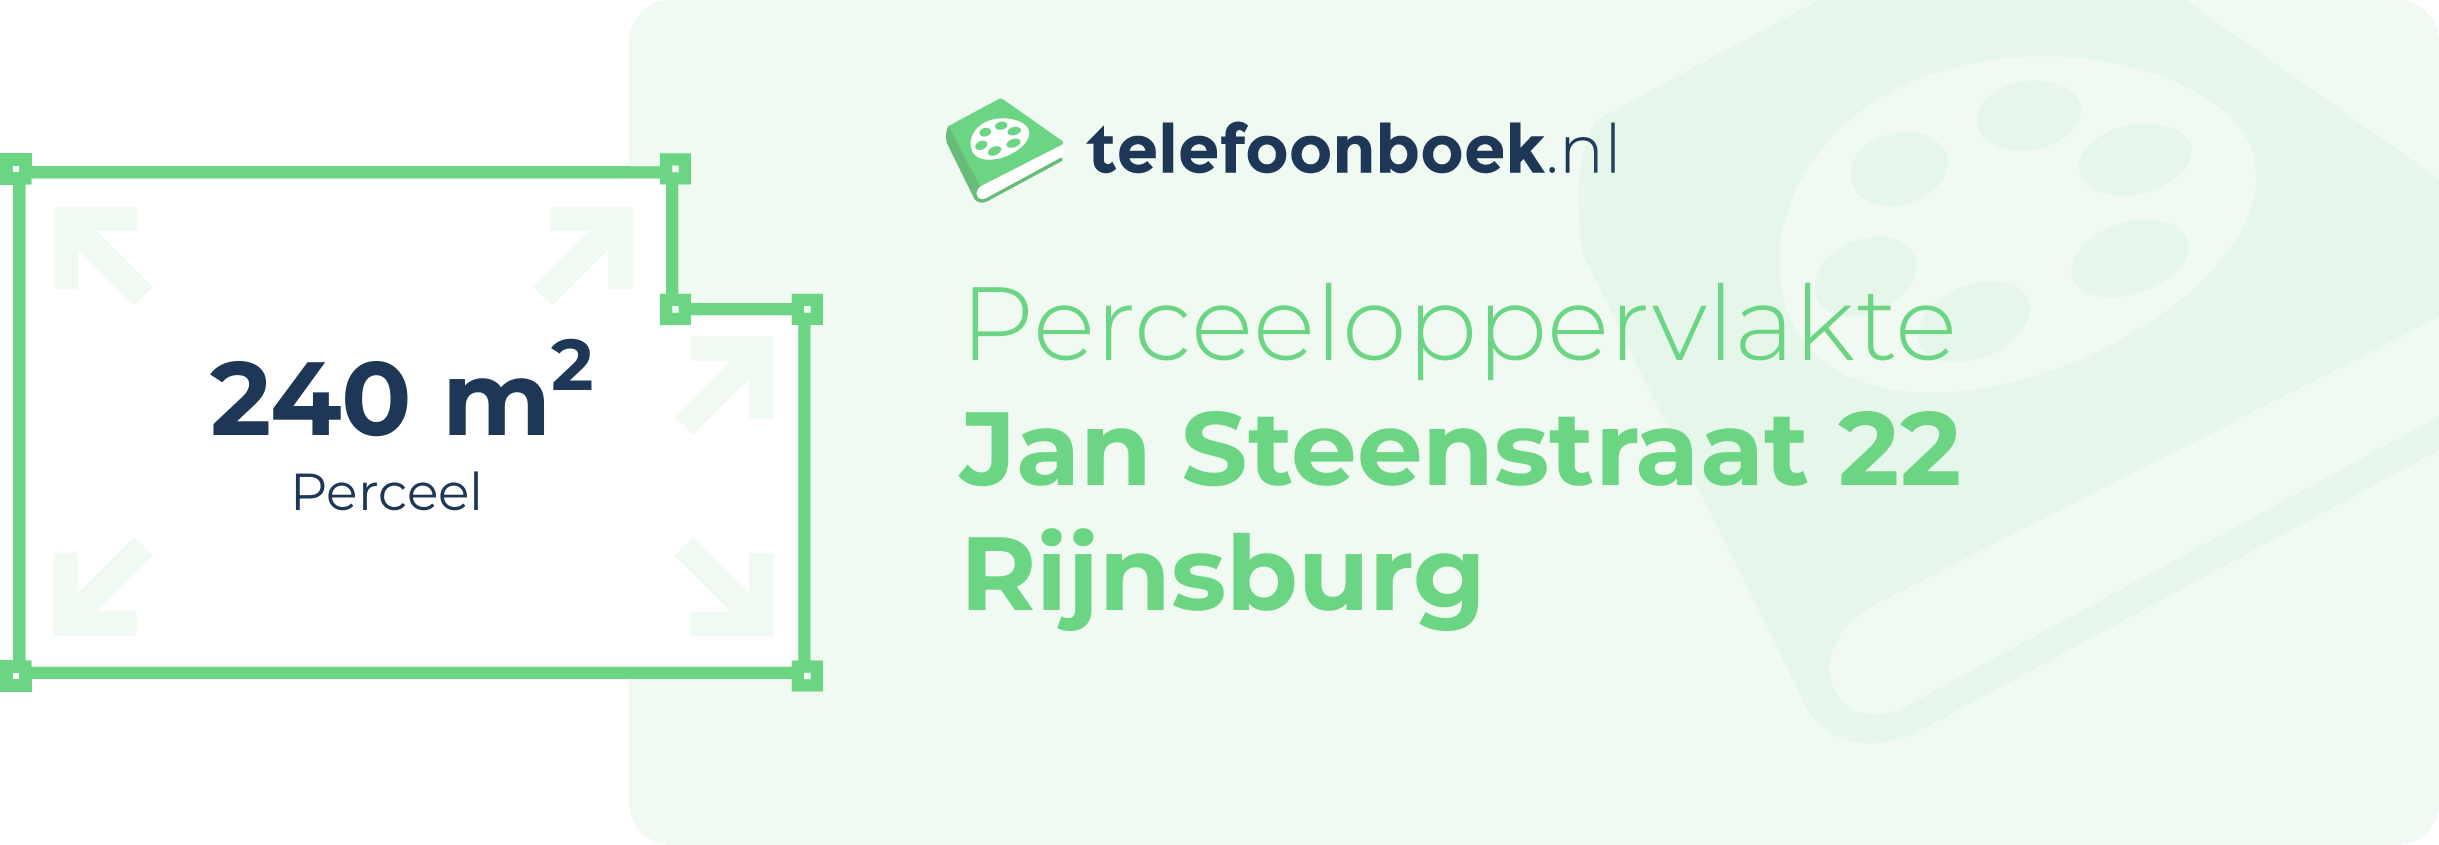 Perceeloppervlakte Jan Steenstraat 22 Rijnsburg